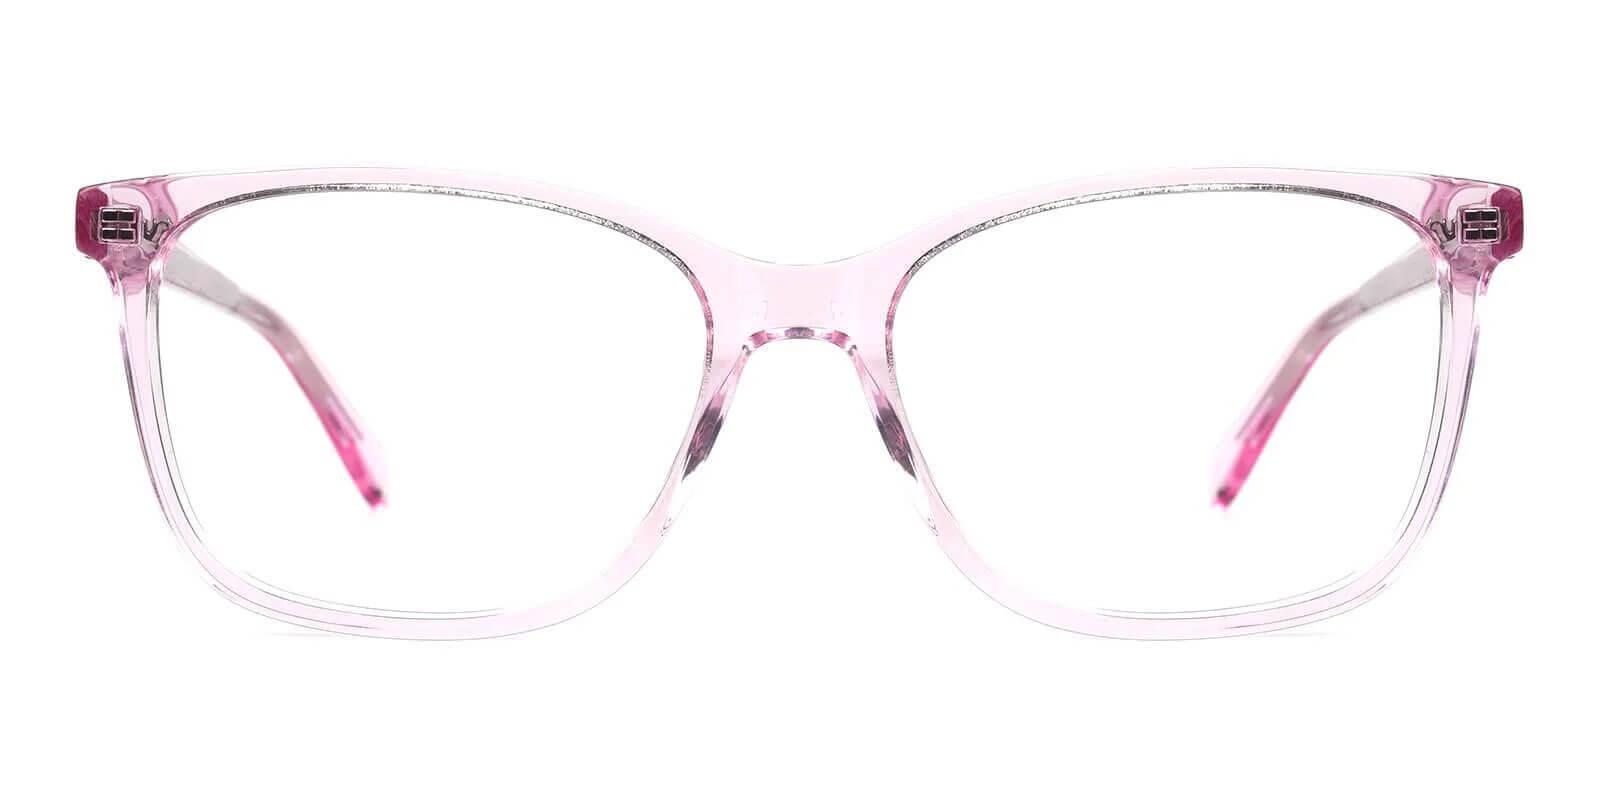 Groove Pink Acetate Eyeglasses , SpringHinges , UniversalBridgeFit Frames from ABBE Glasses